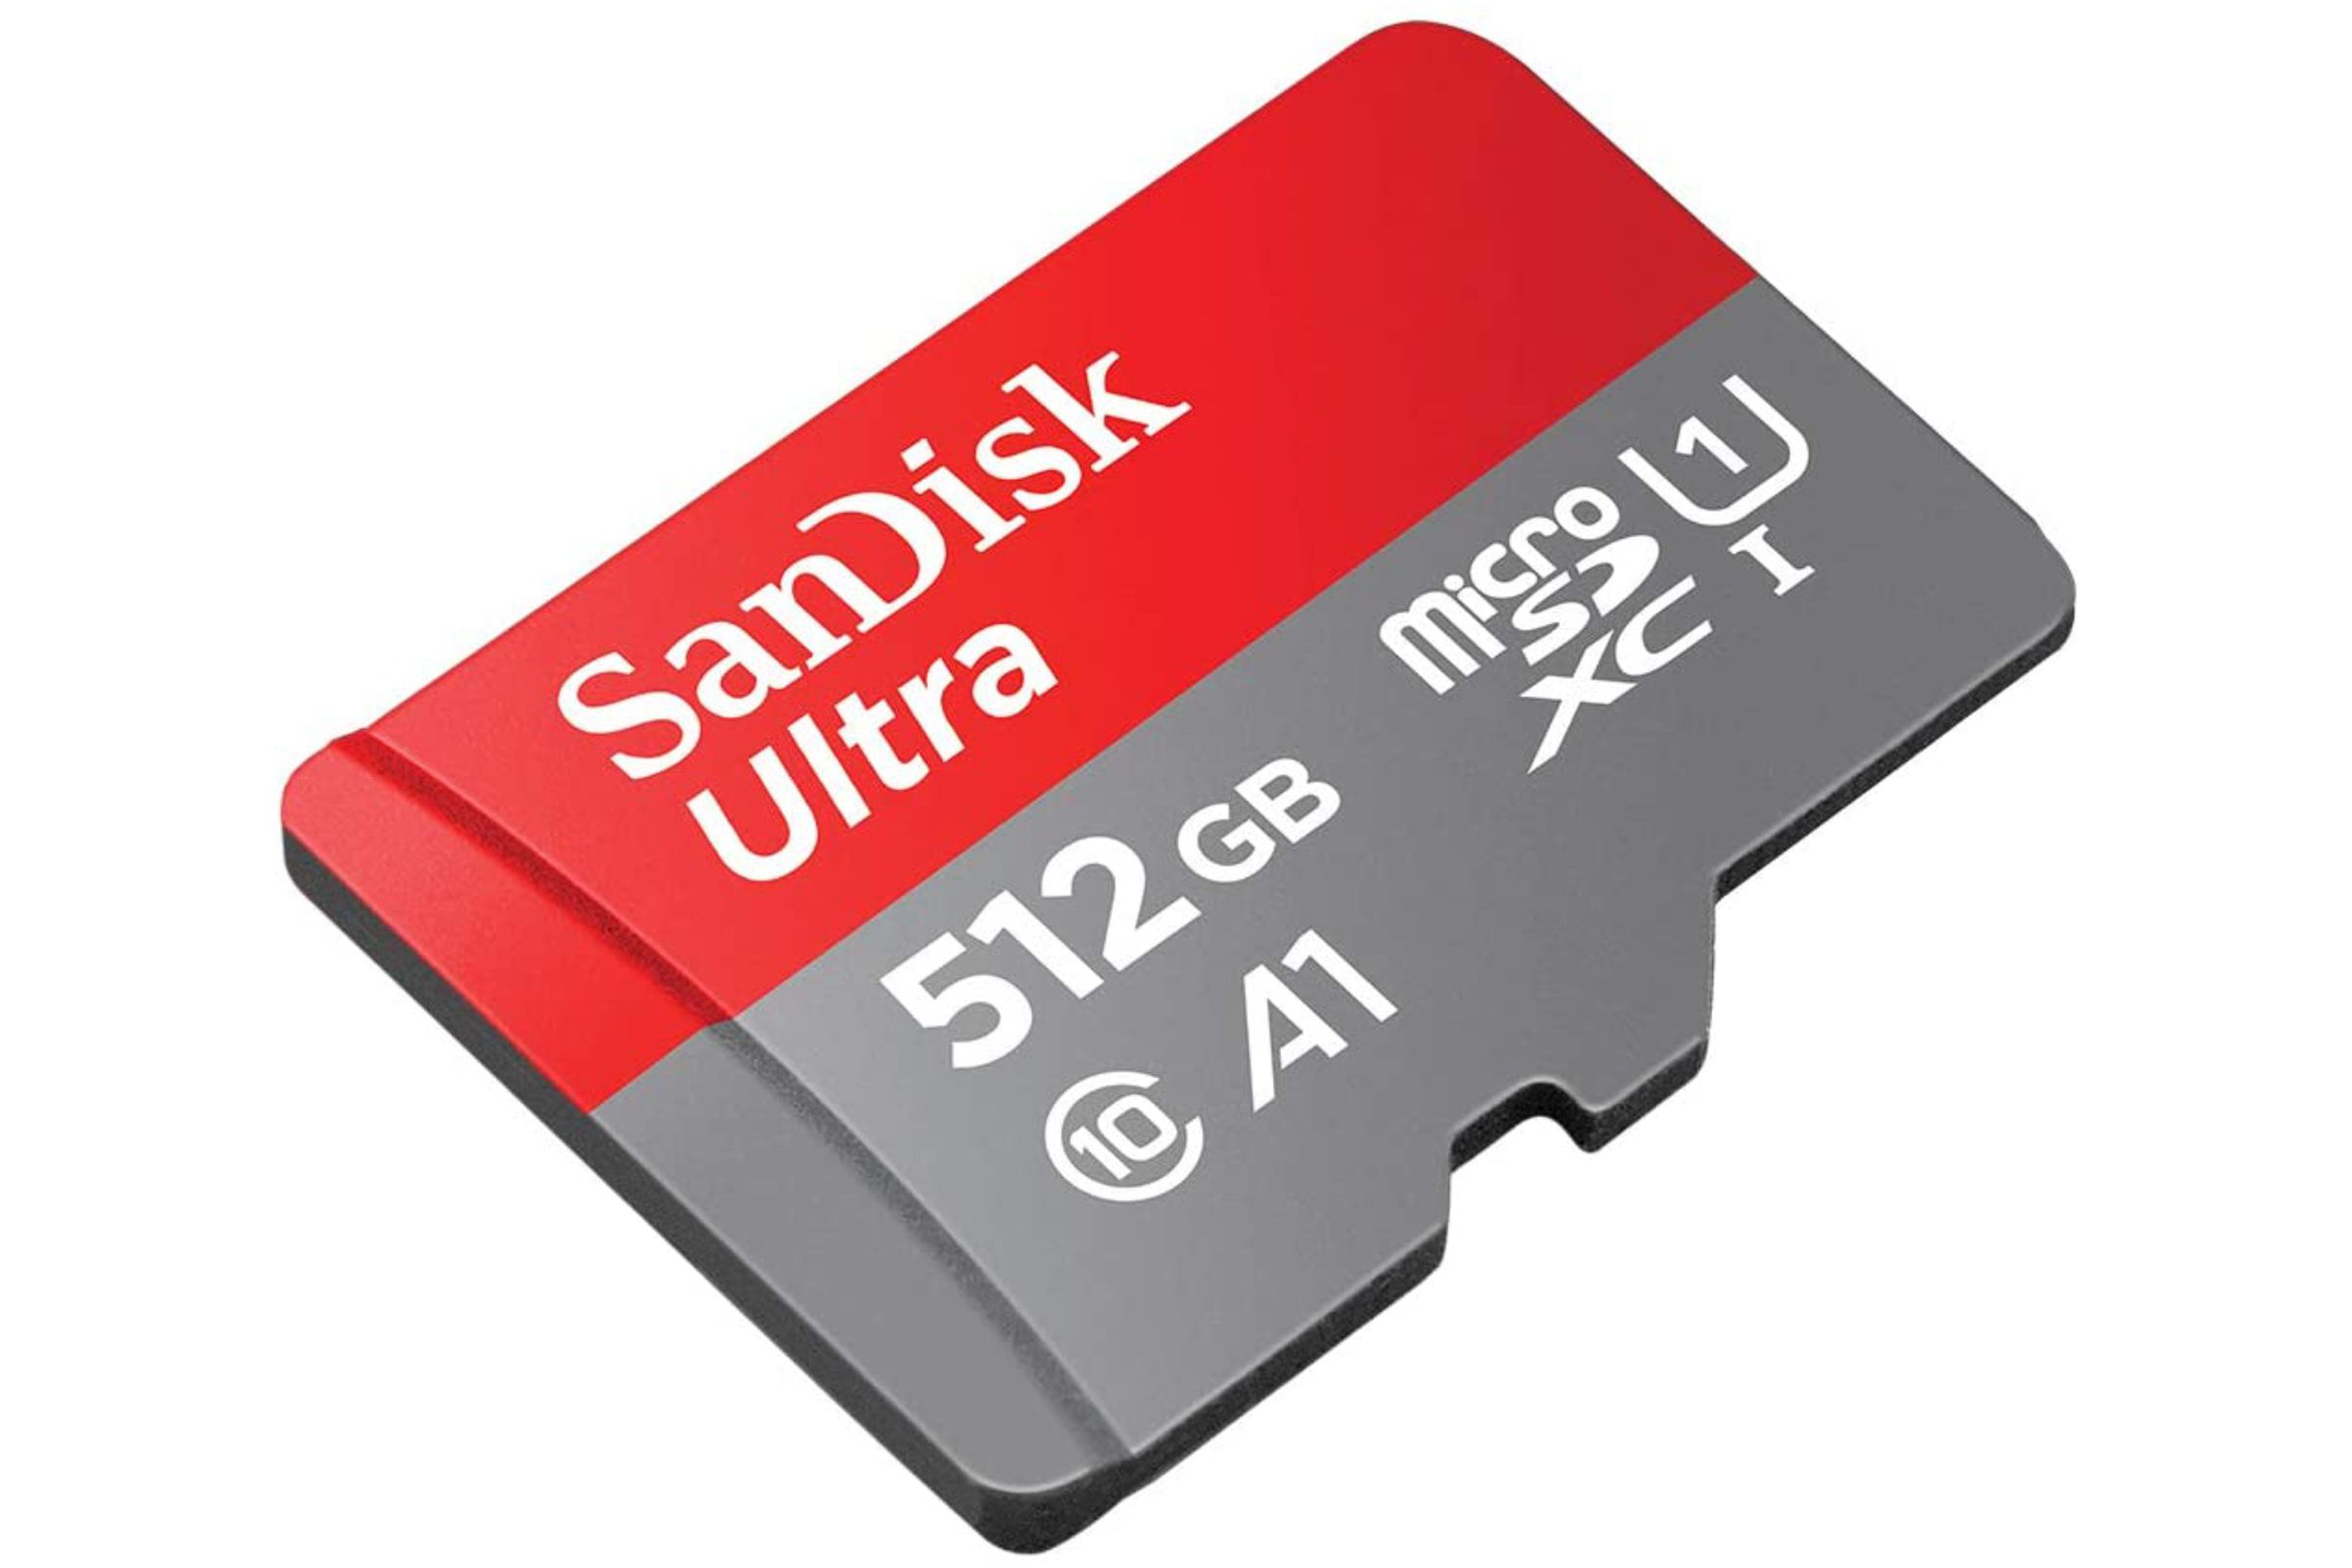 Sandisk 512GB microSD card